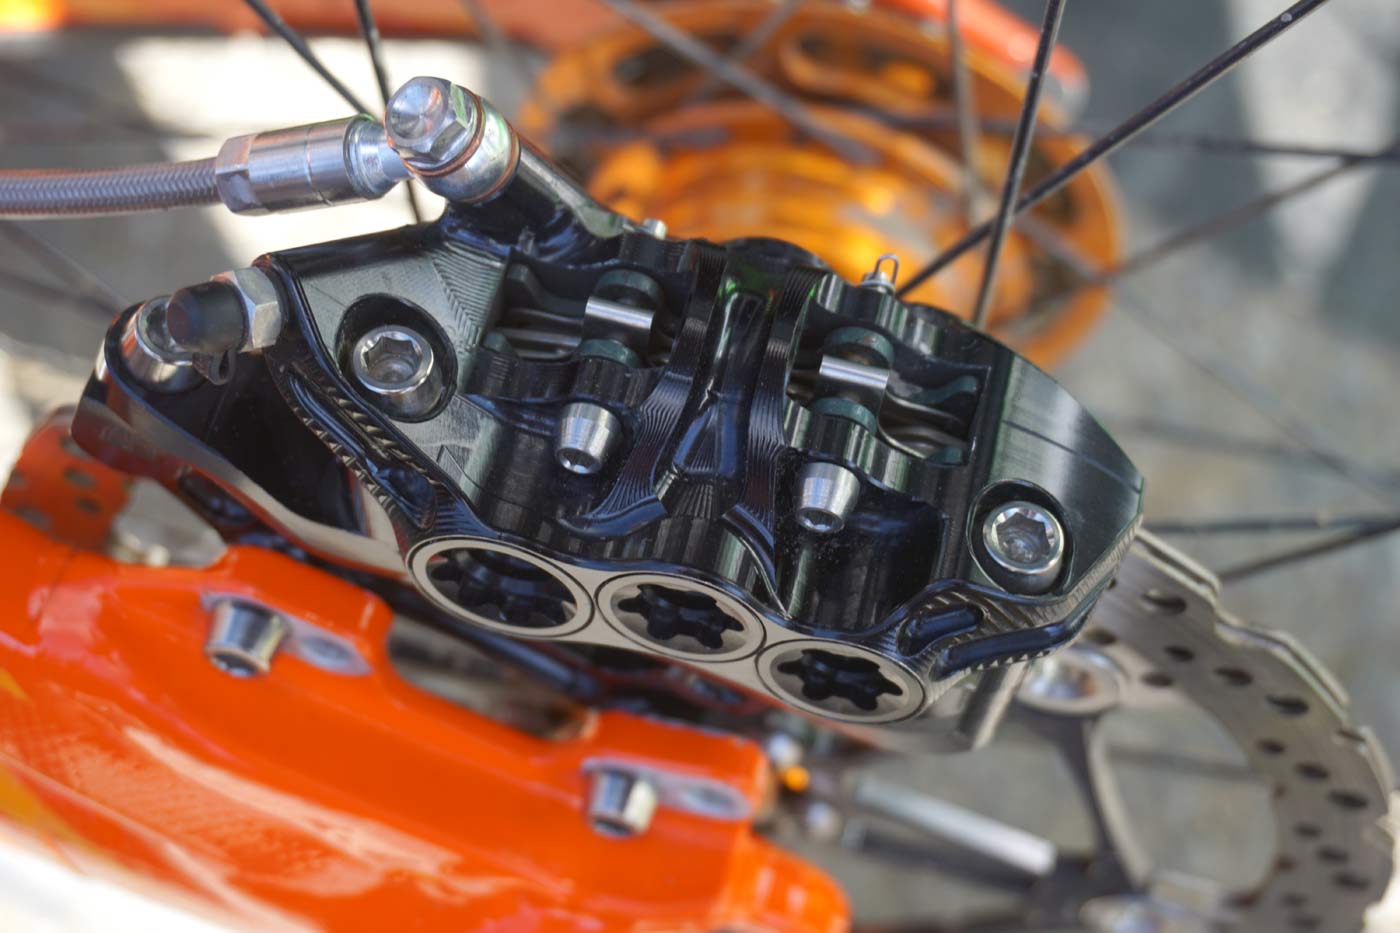 prototype hope v6ti 6-piston hydraulic mountain bike brakes for downhill and e-bikes